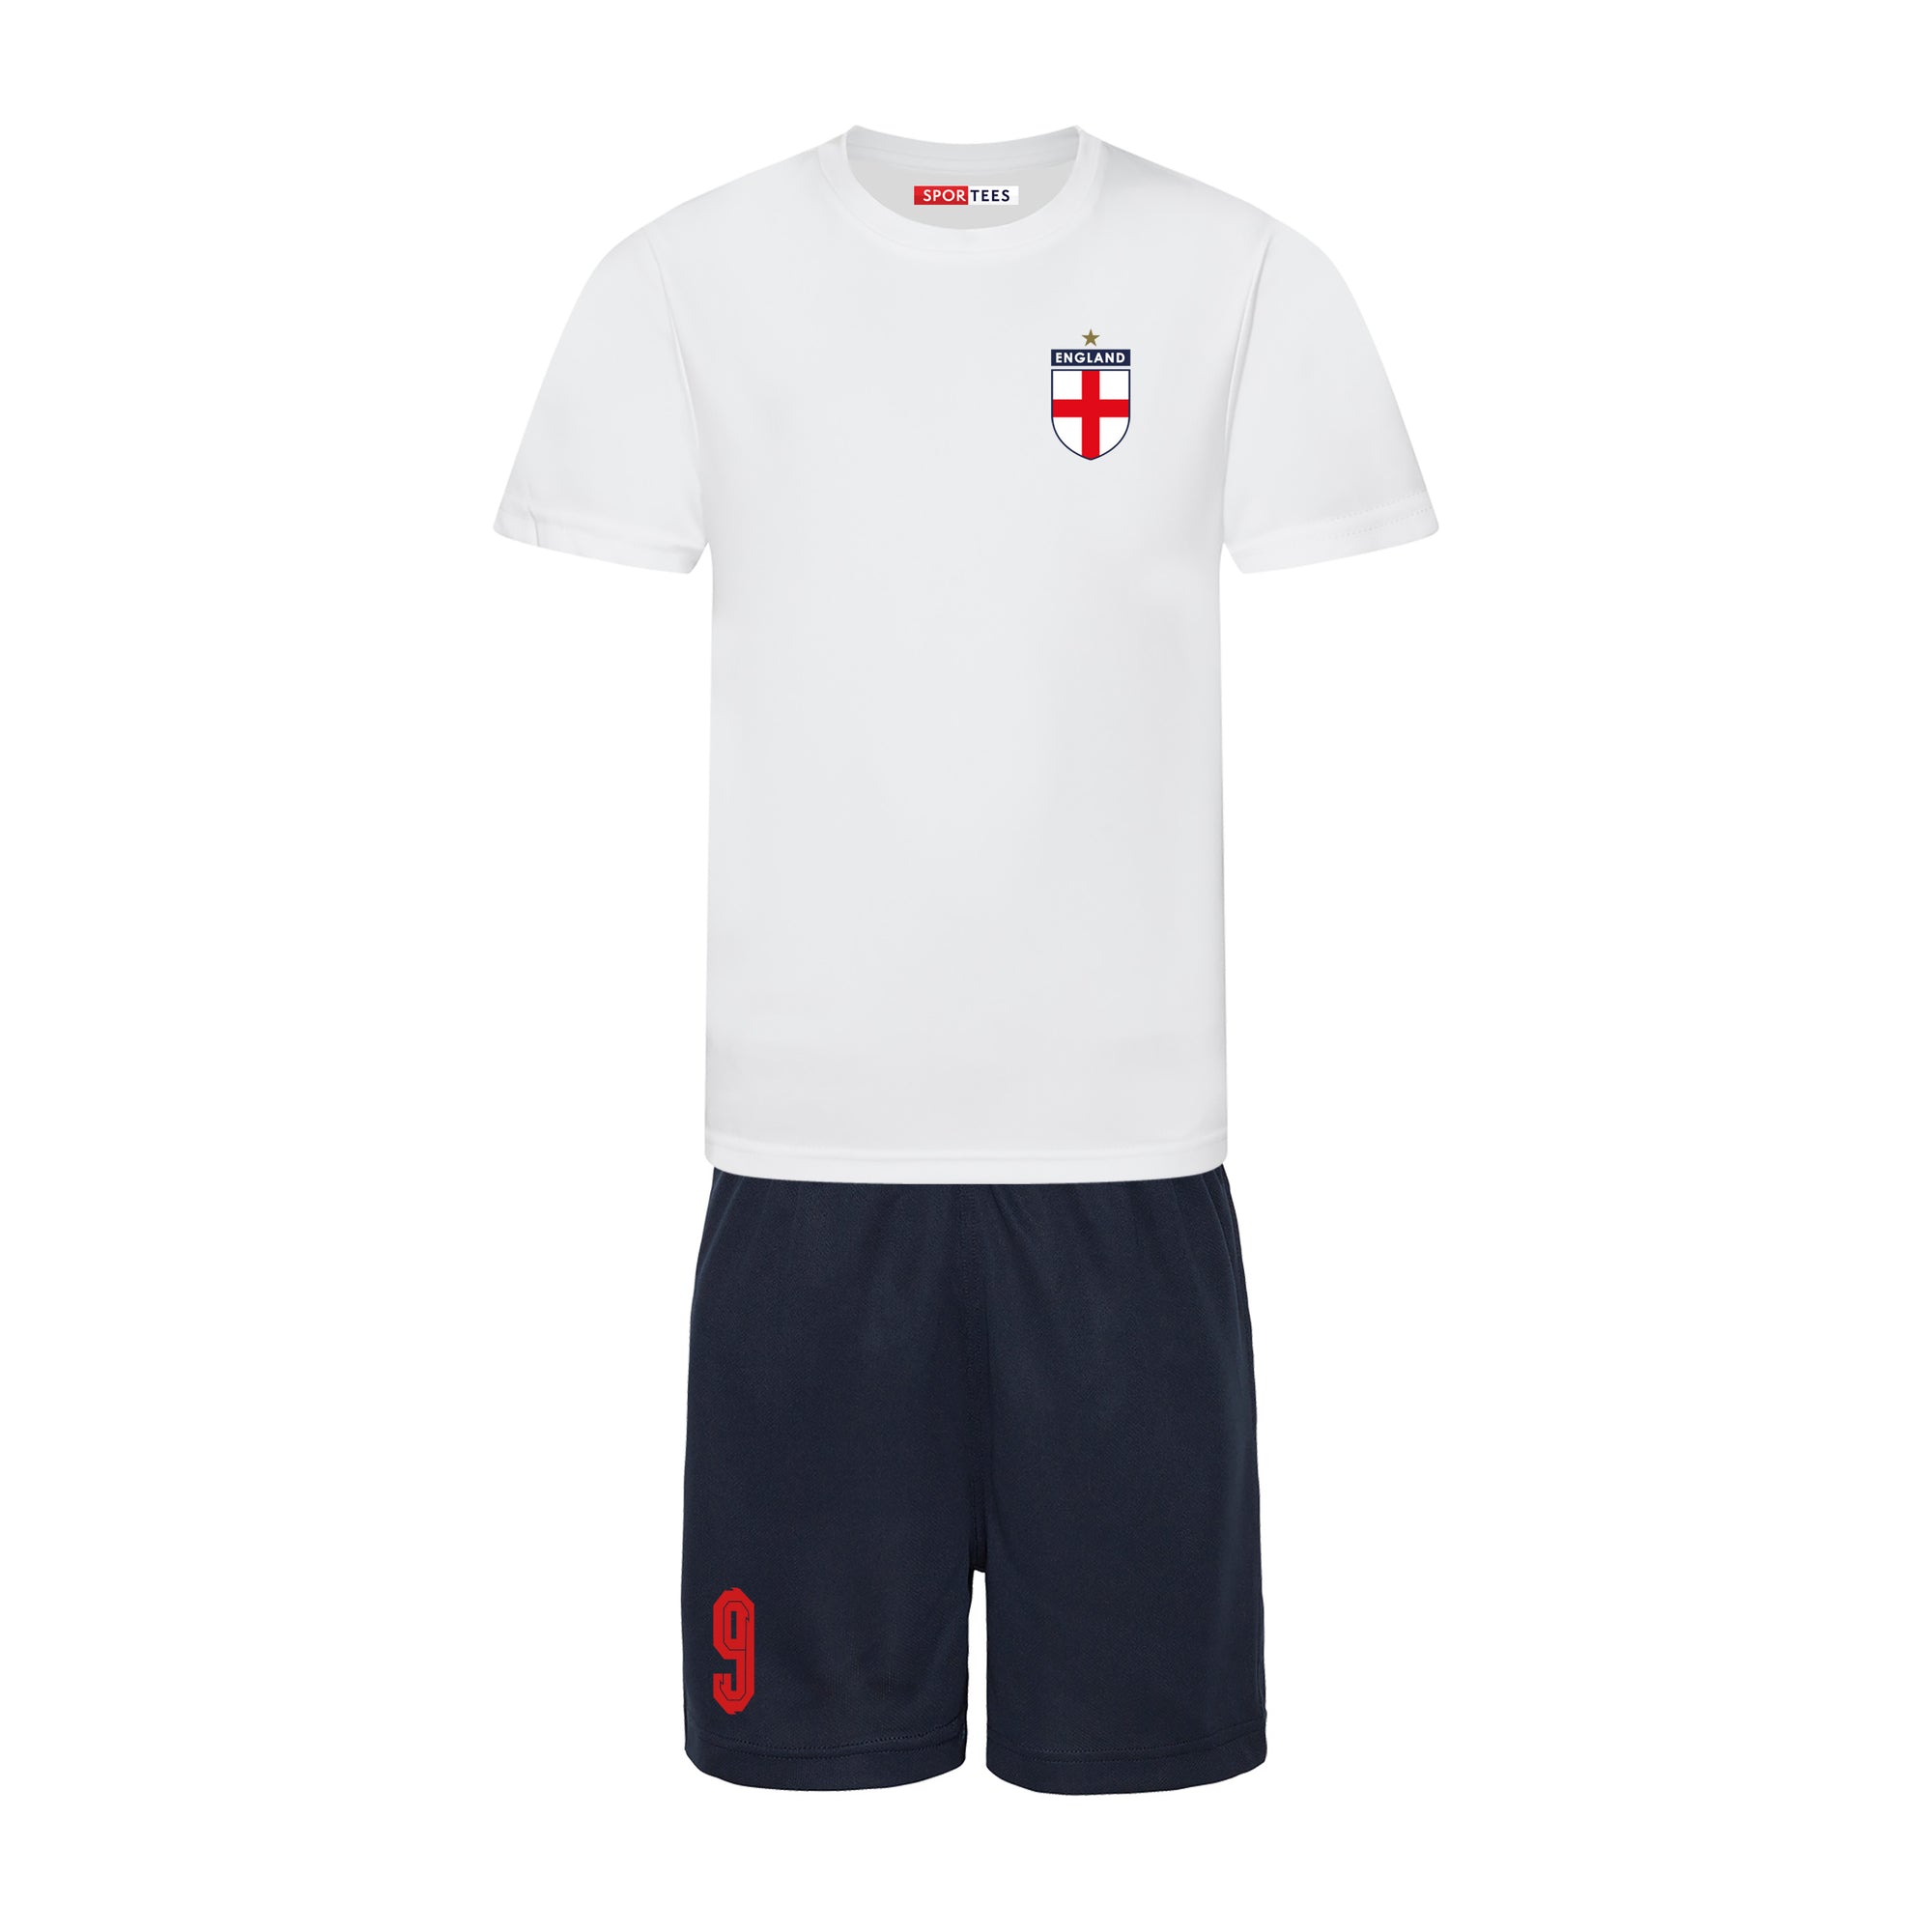 Personalised England Style White & Navy Home Kit Bundle With Socks & Bag